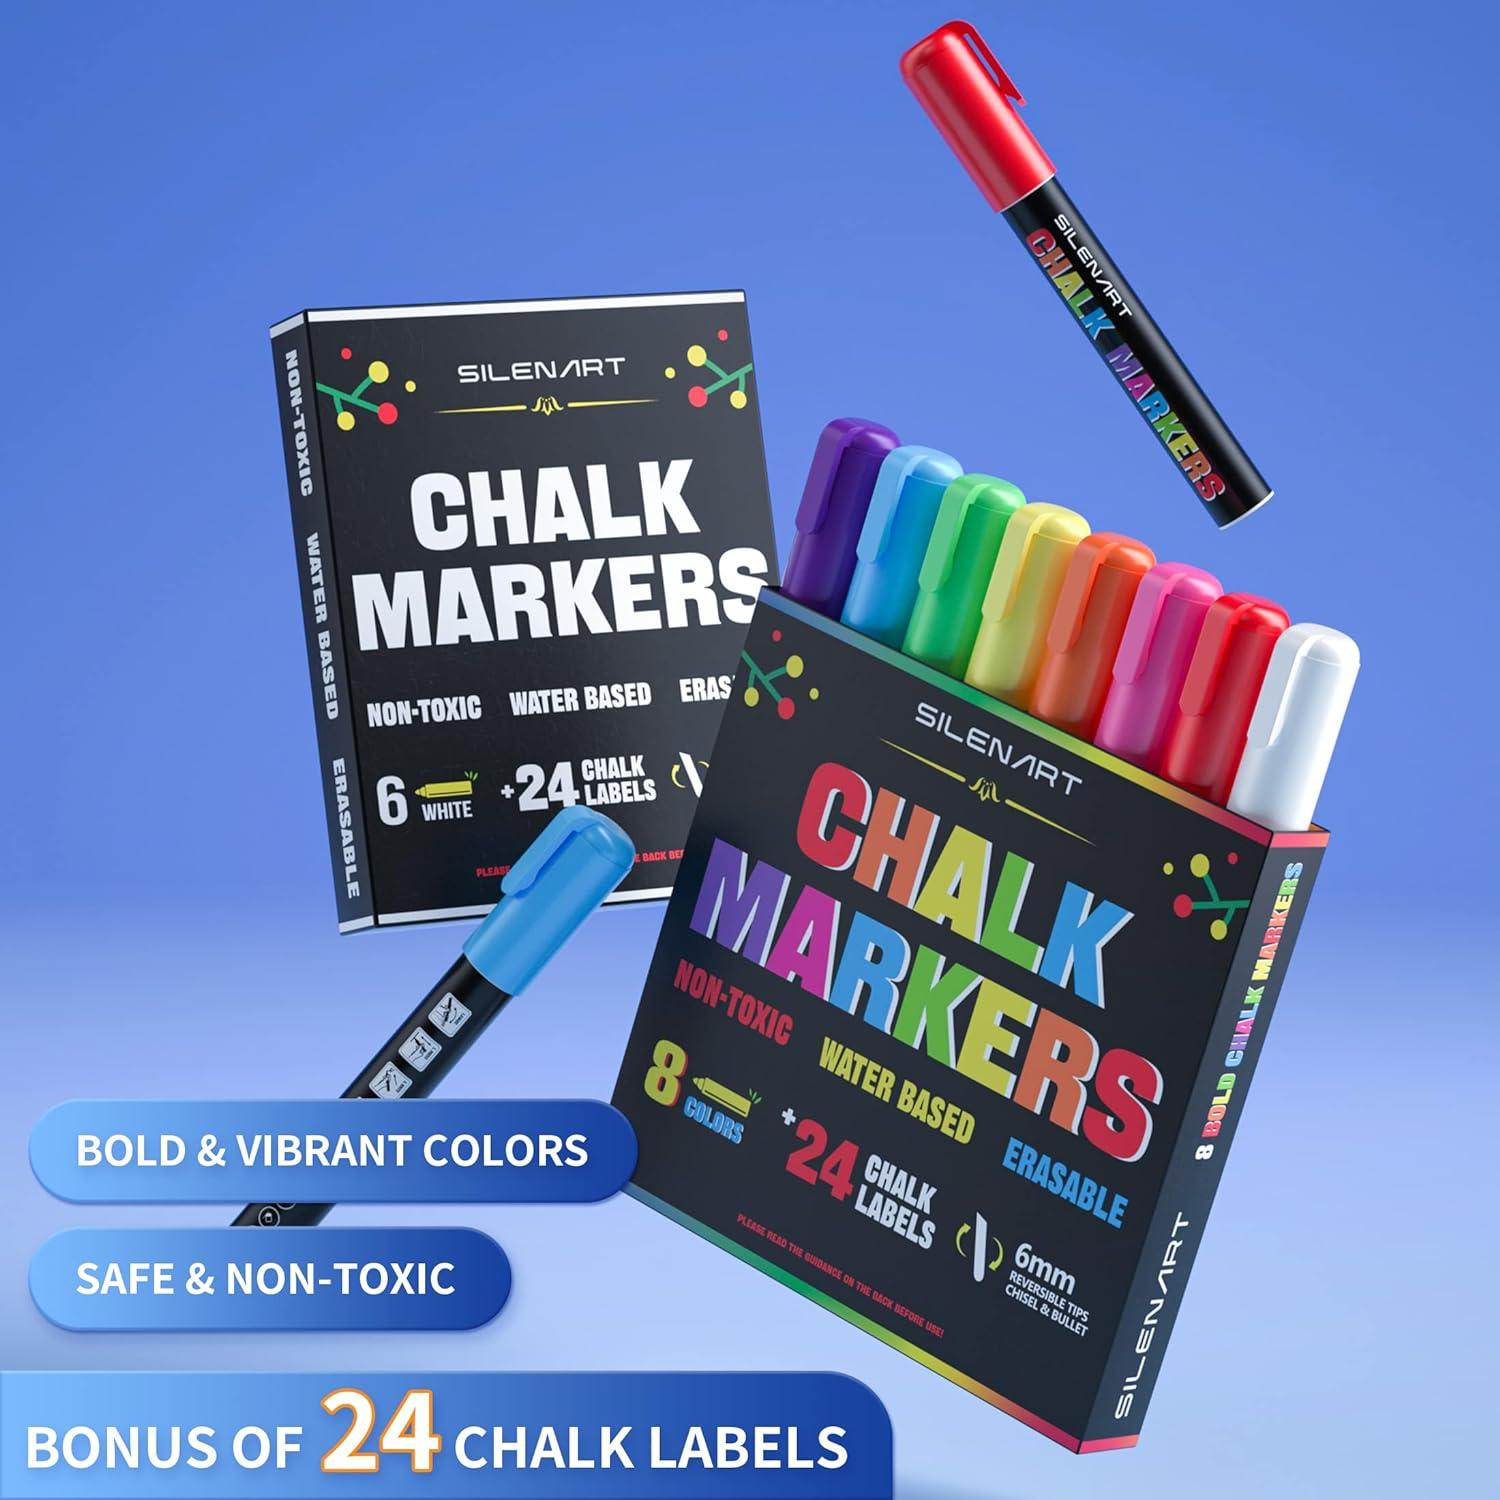 Liquid Chalk Markers